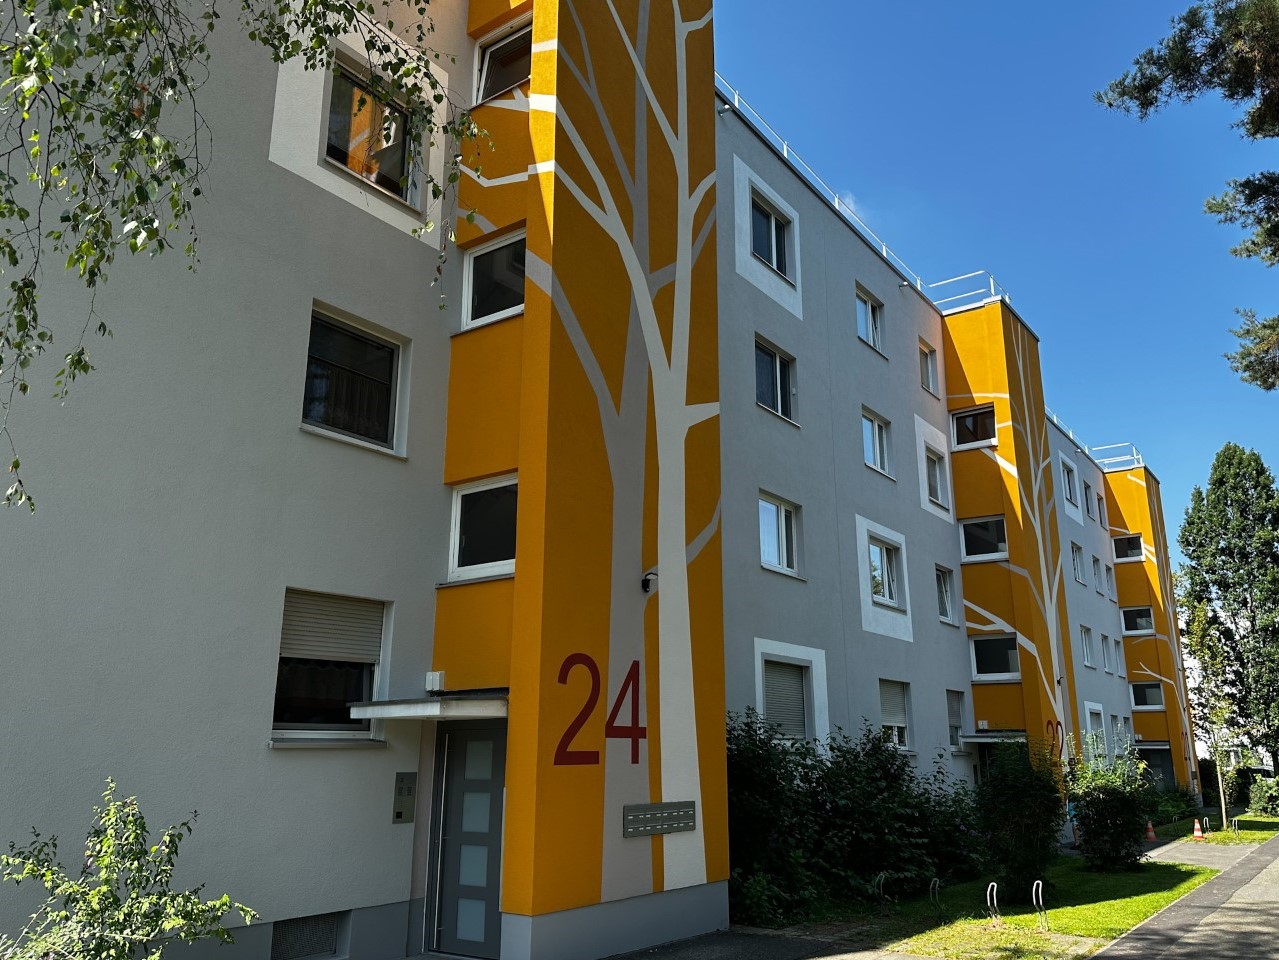 Untersbergstraße 20 - 24